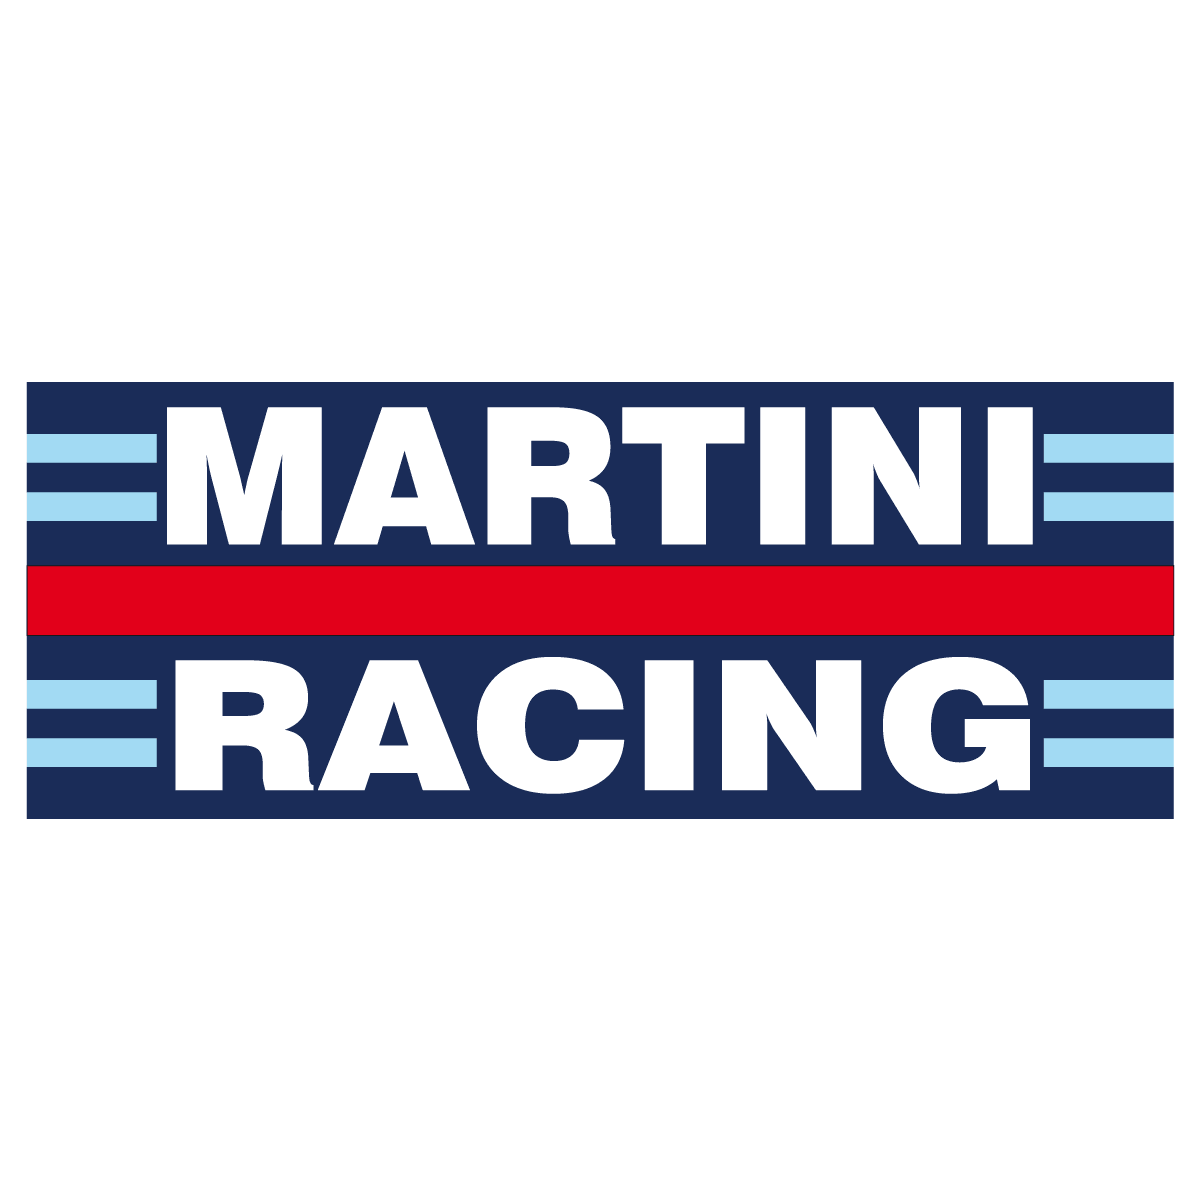 Autocollants: Martini racing 0